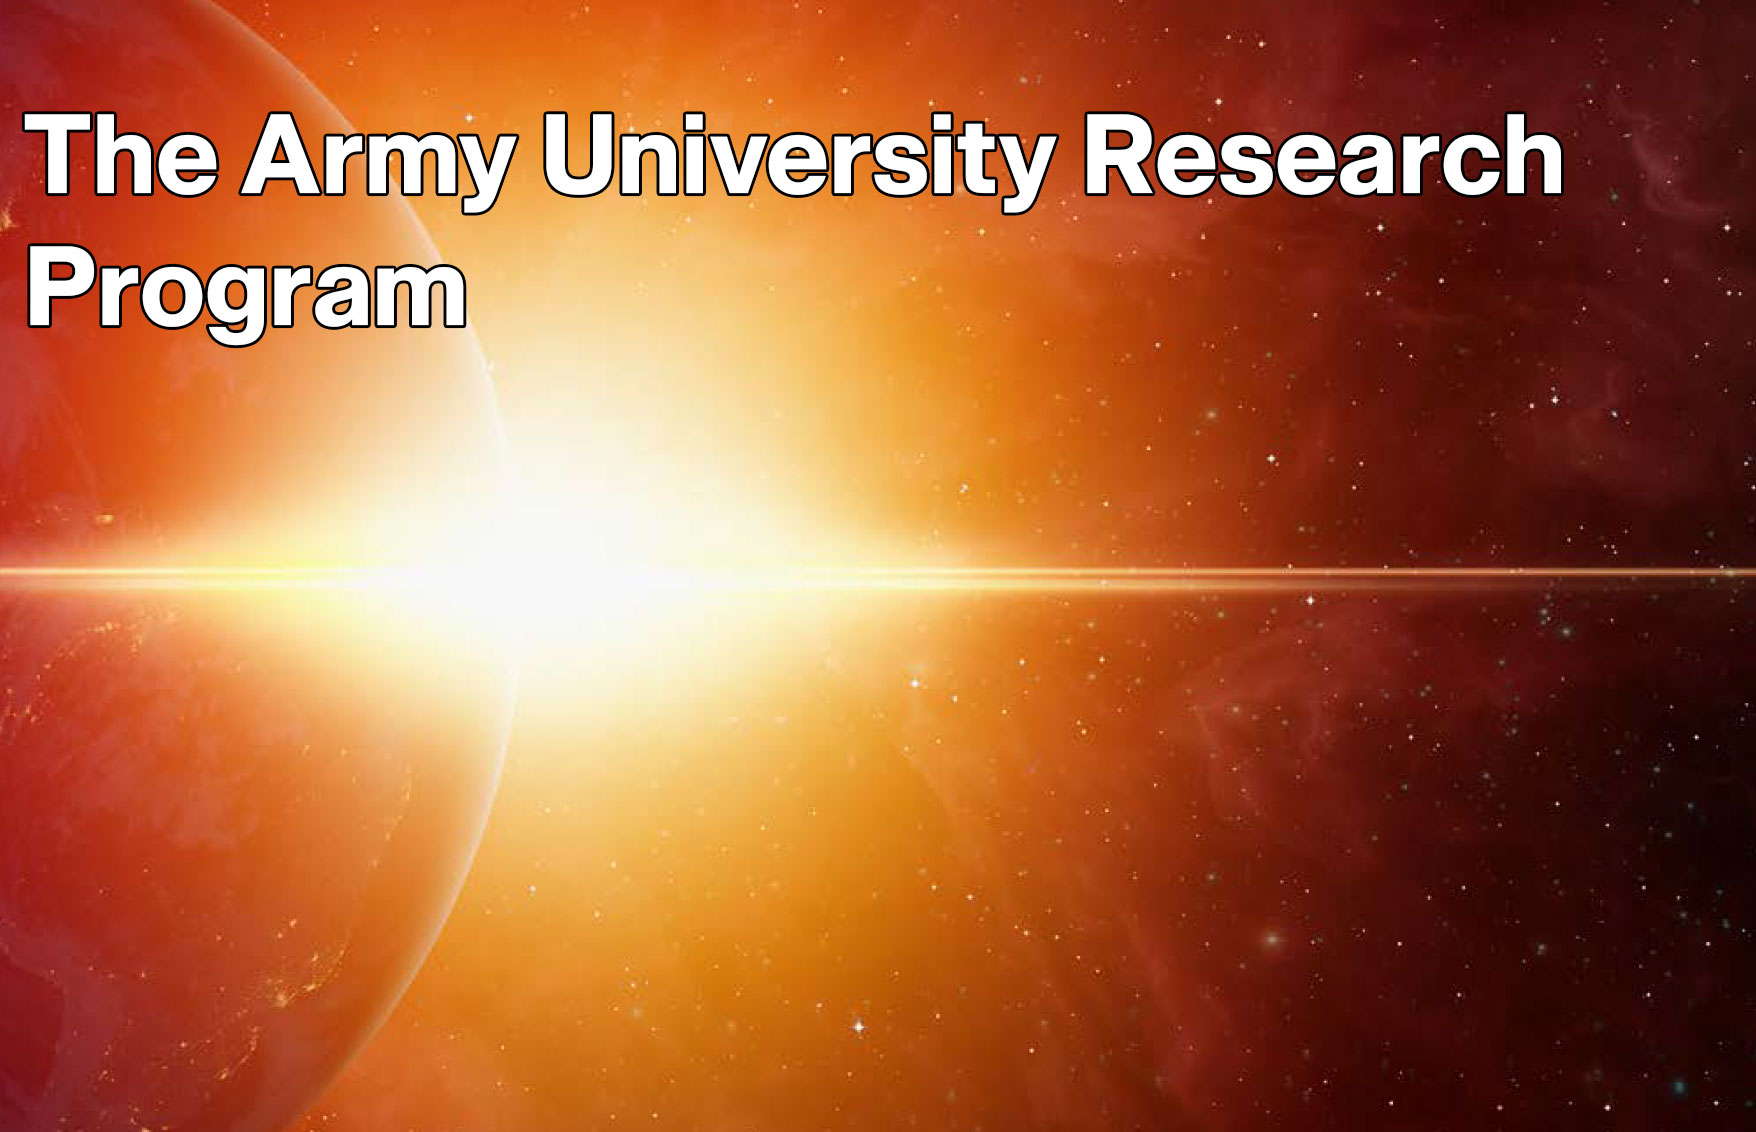 The Army University Research Program